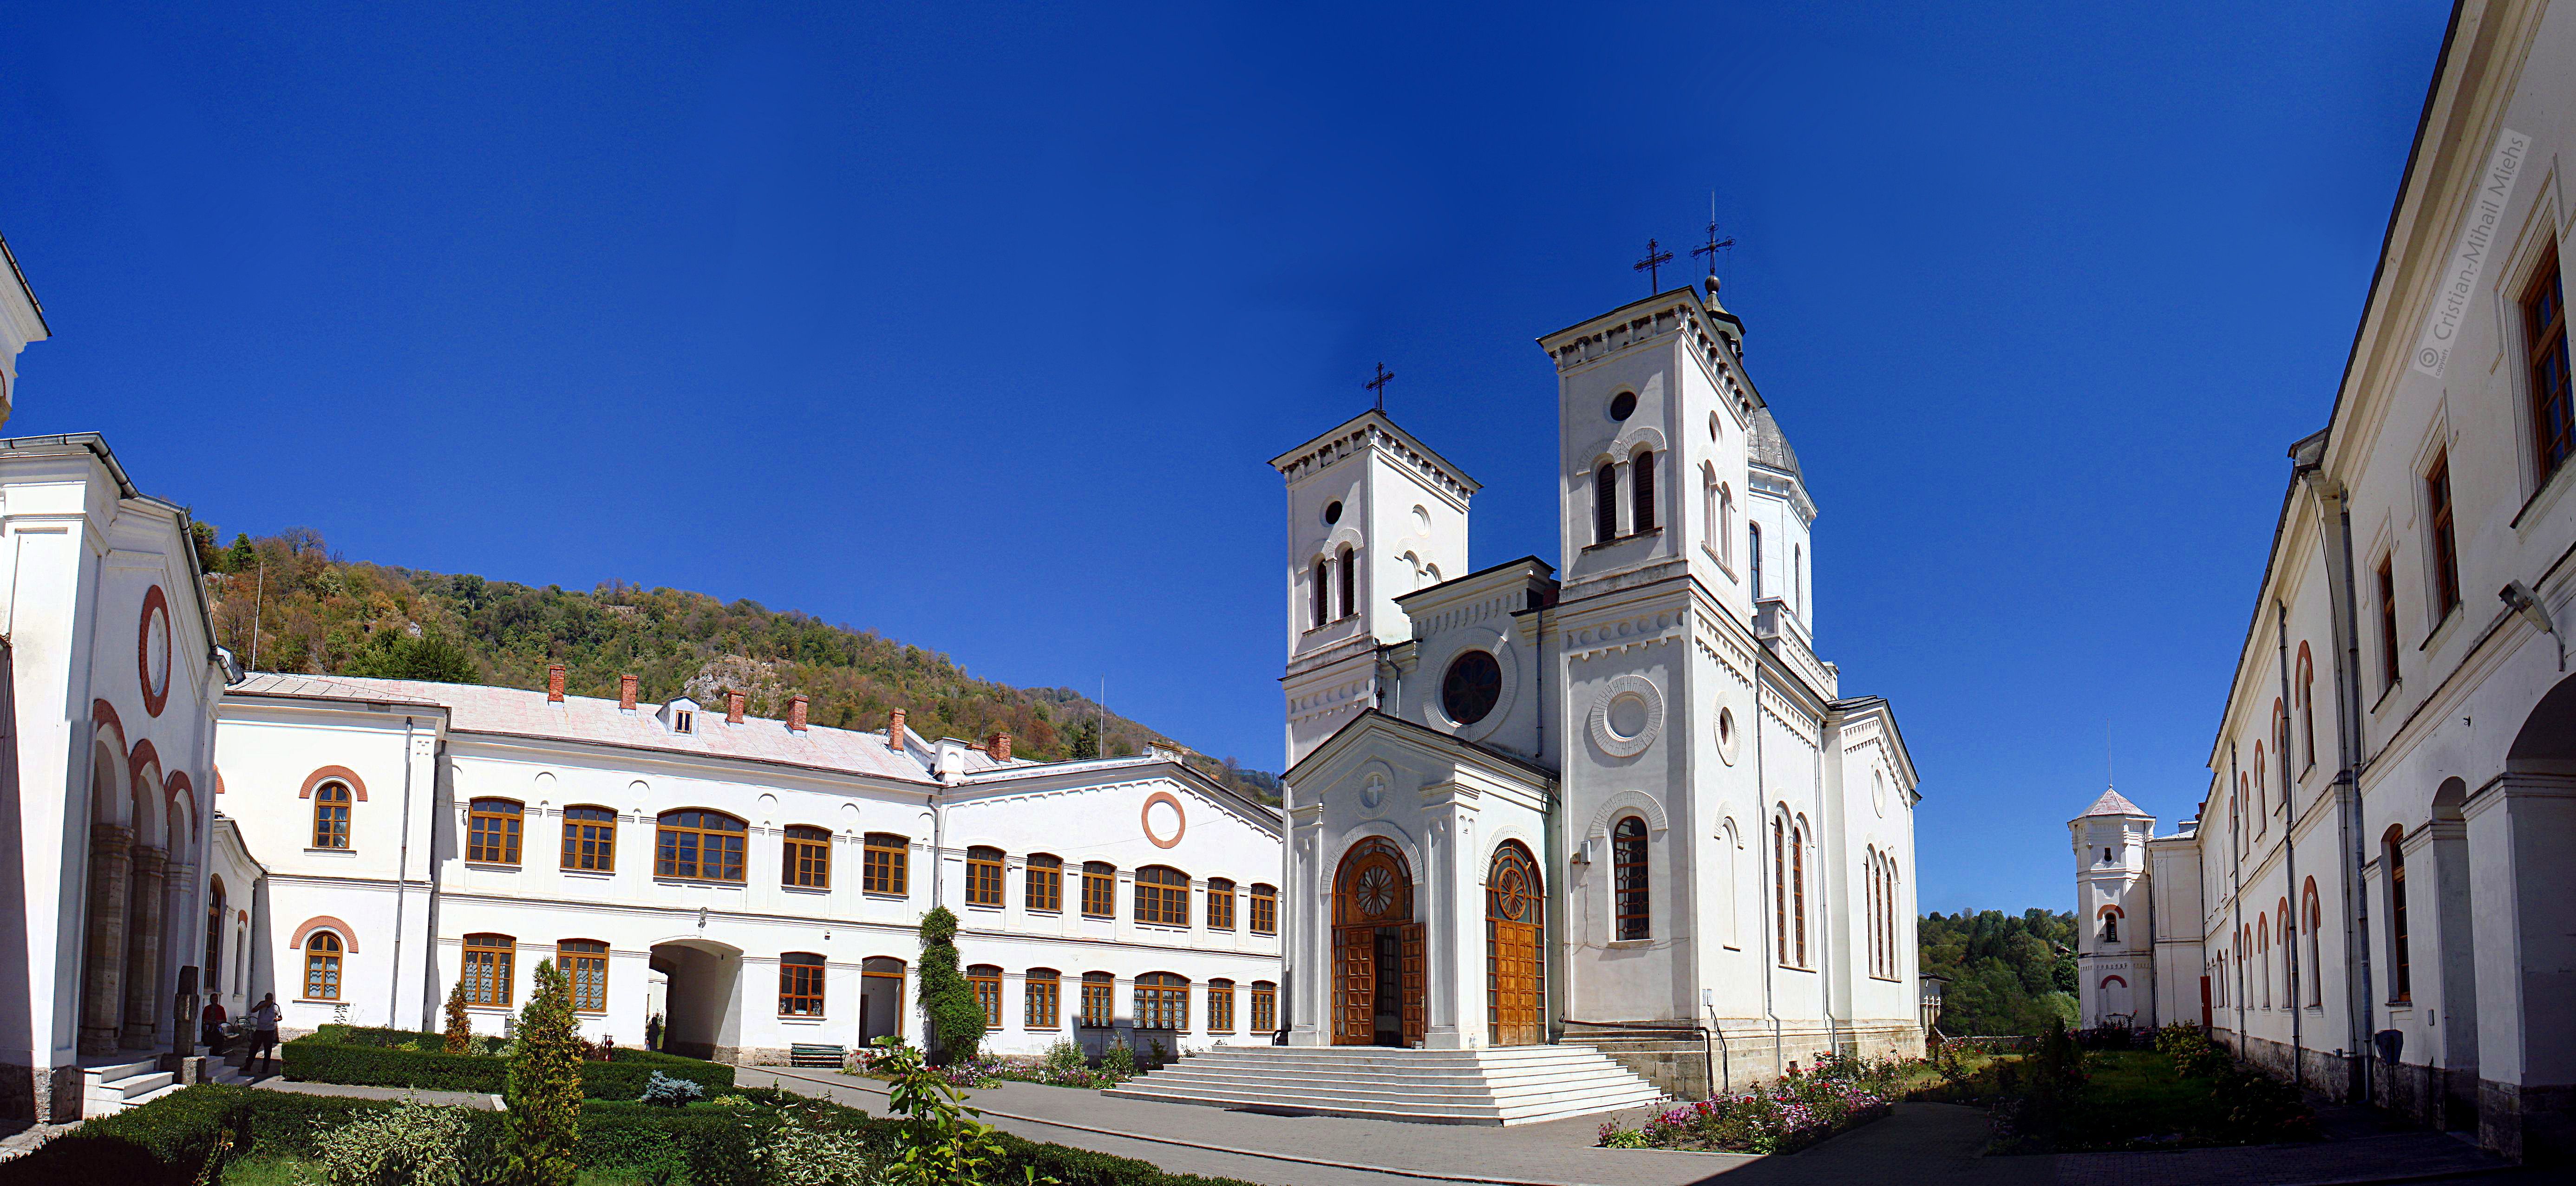 Manastirea_Bistrita-Valcea-vedere_de_ansamblu